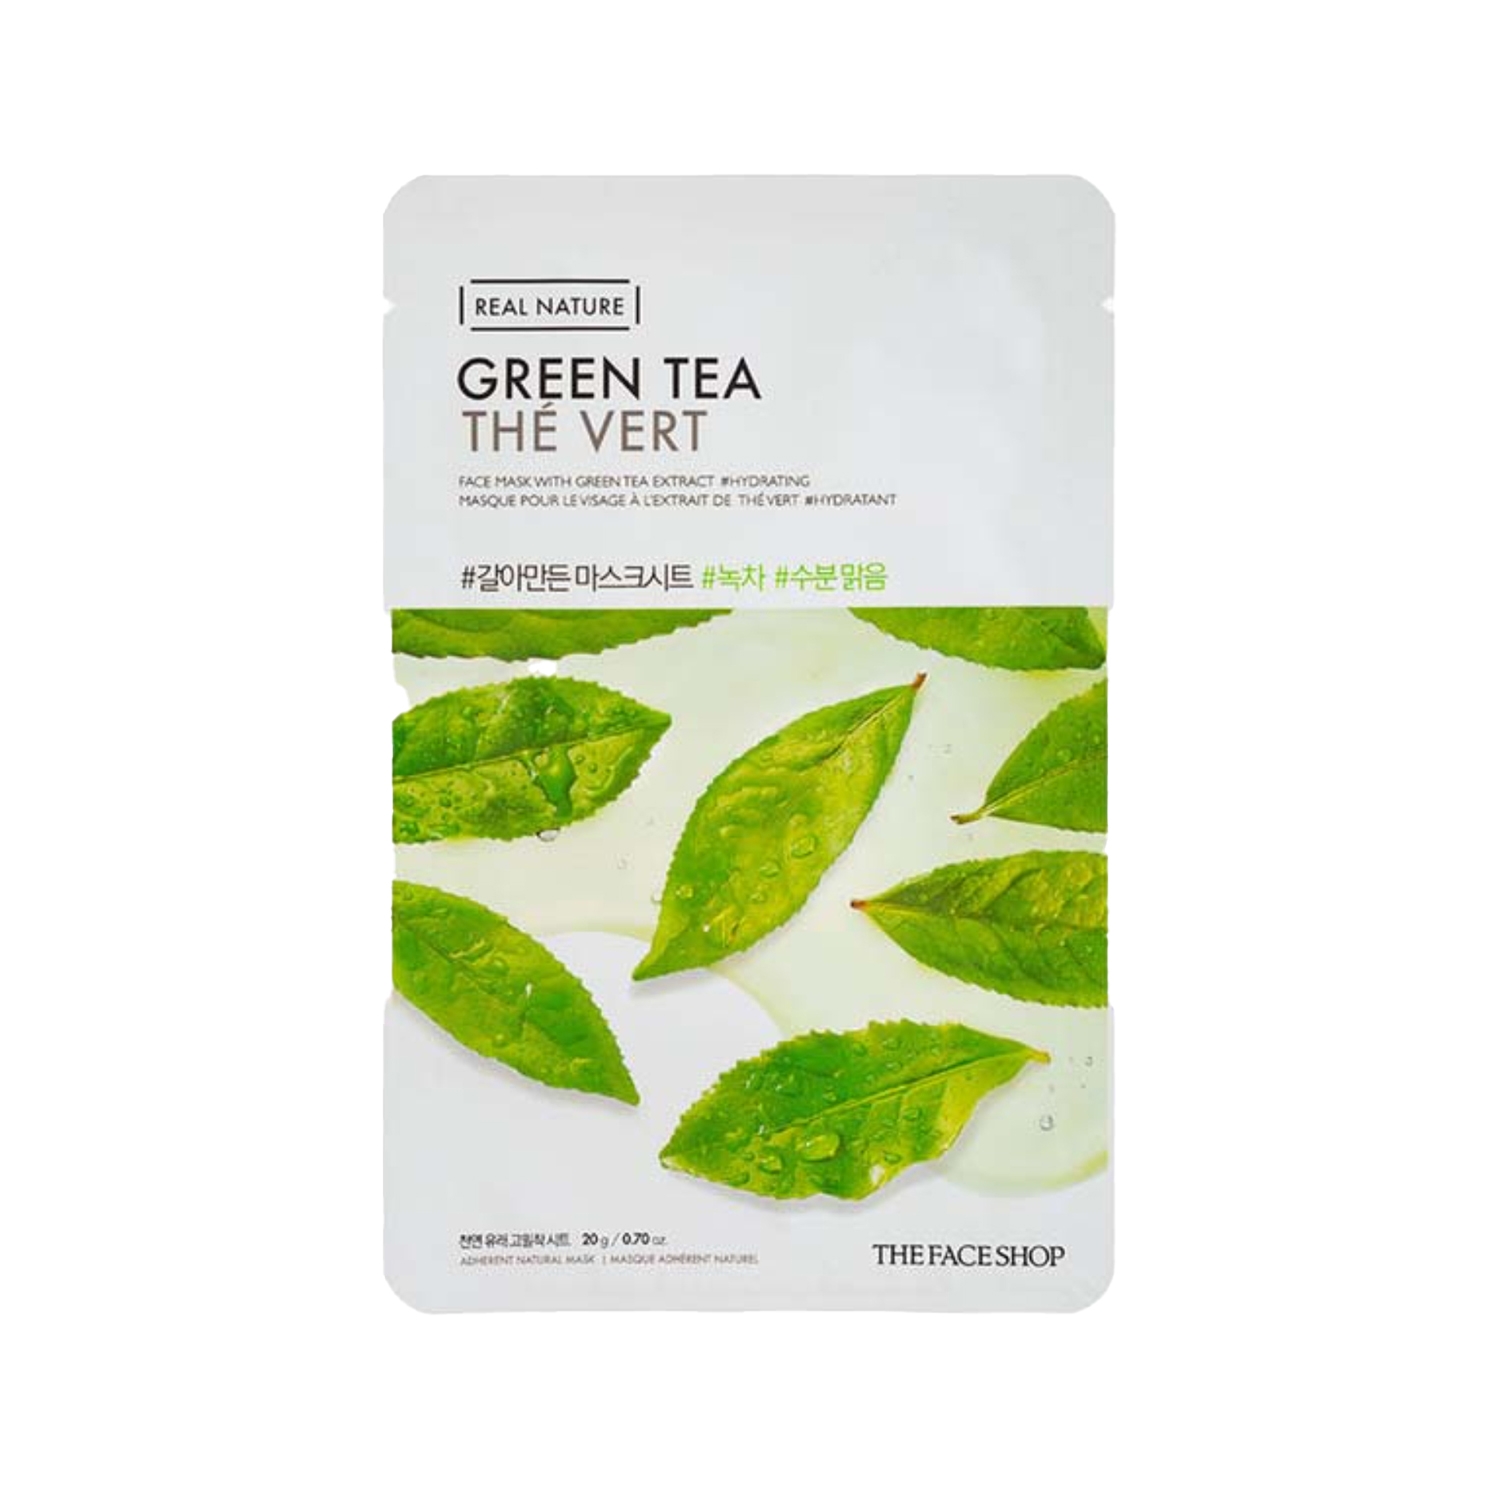 The Face Shop Real Nature Green Tea Sheet Mask